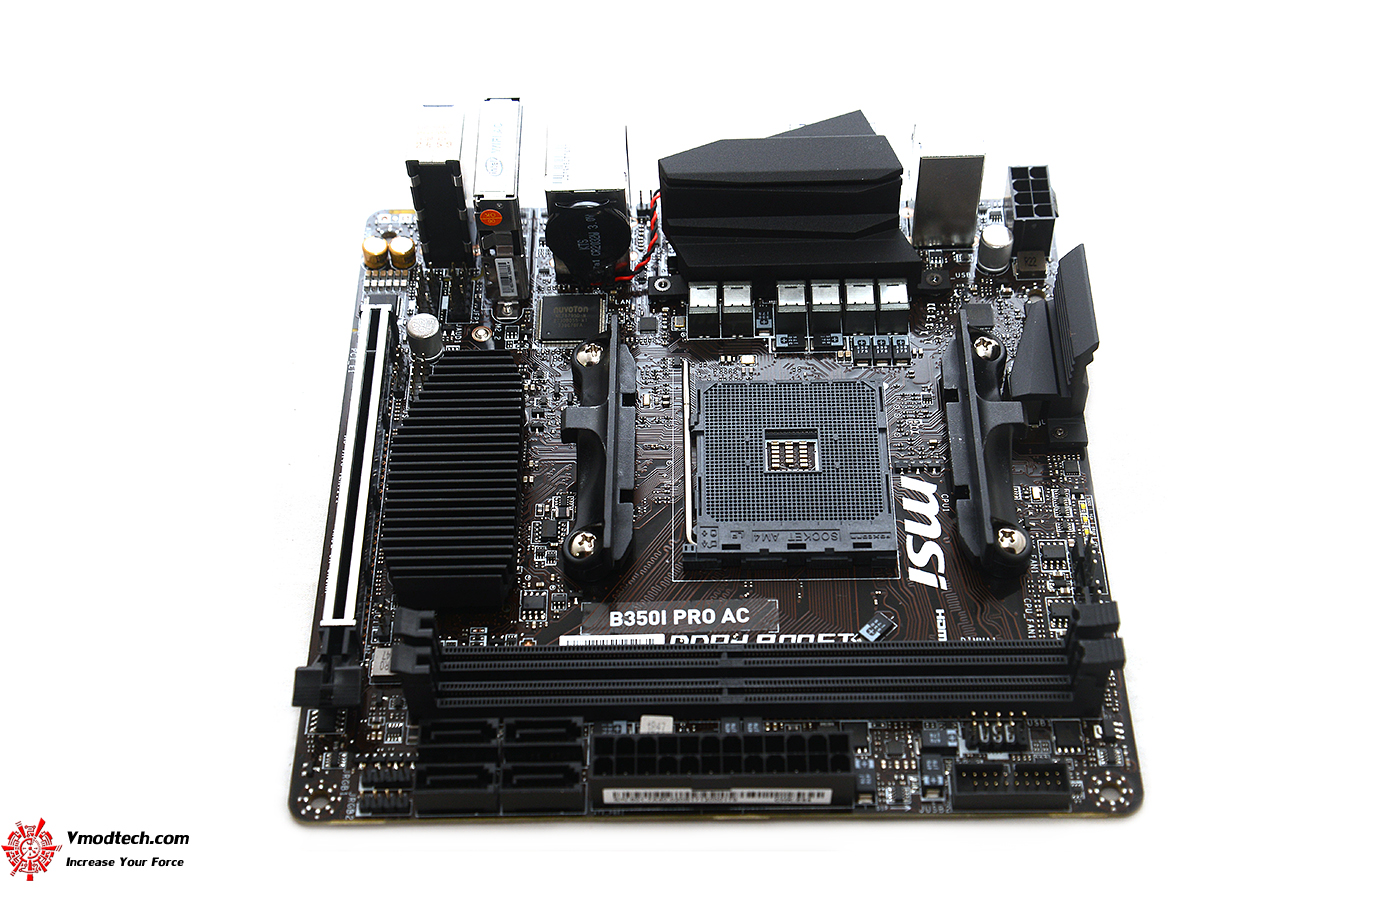 dsc 8843 AMD RYZEN 3 2200G RAVEN RIDGE PROCESSOR REVIEW